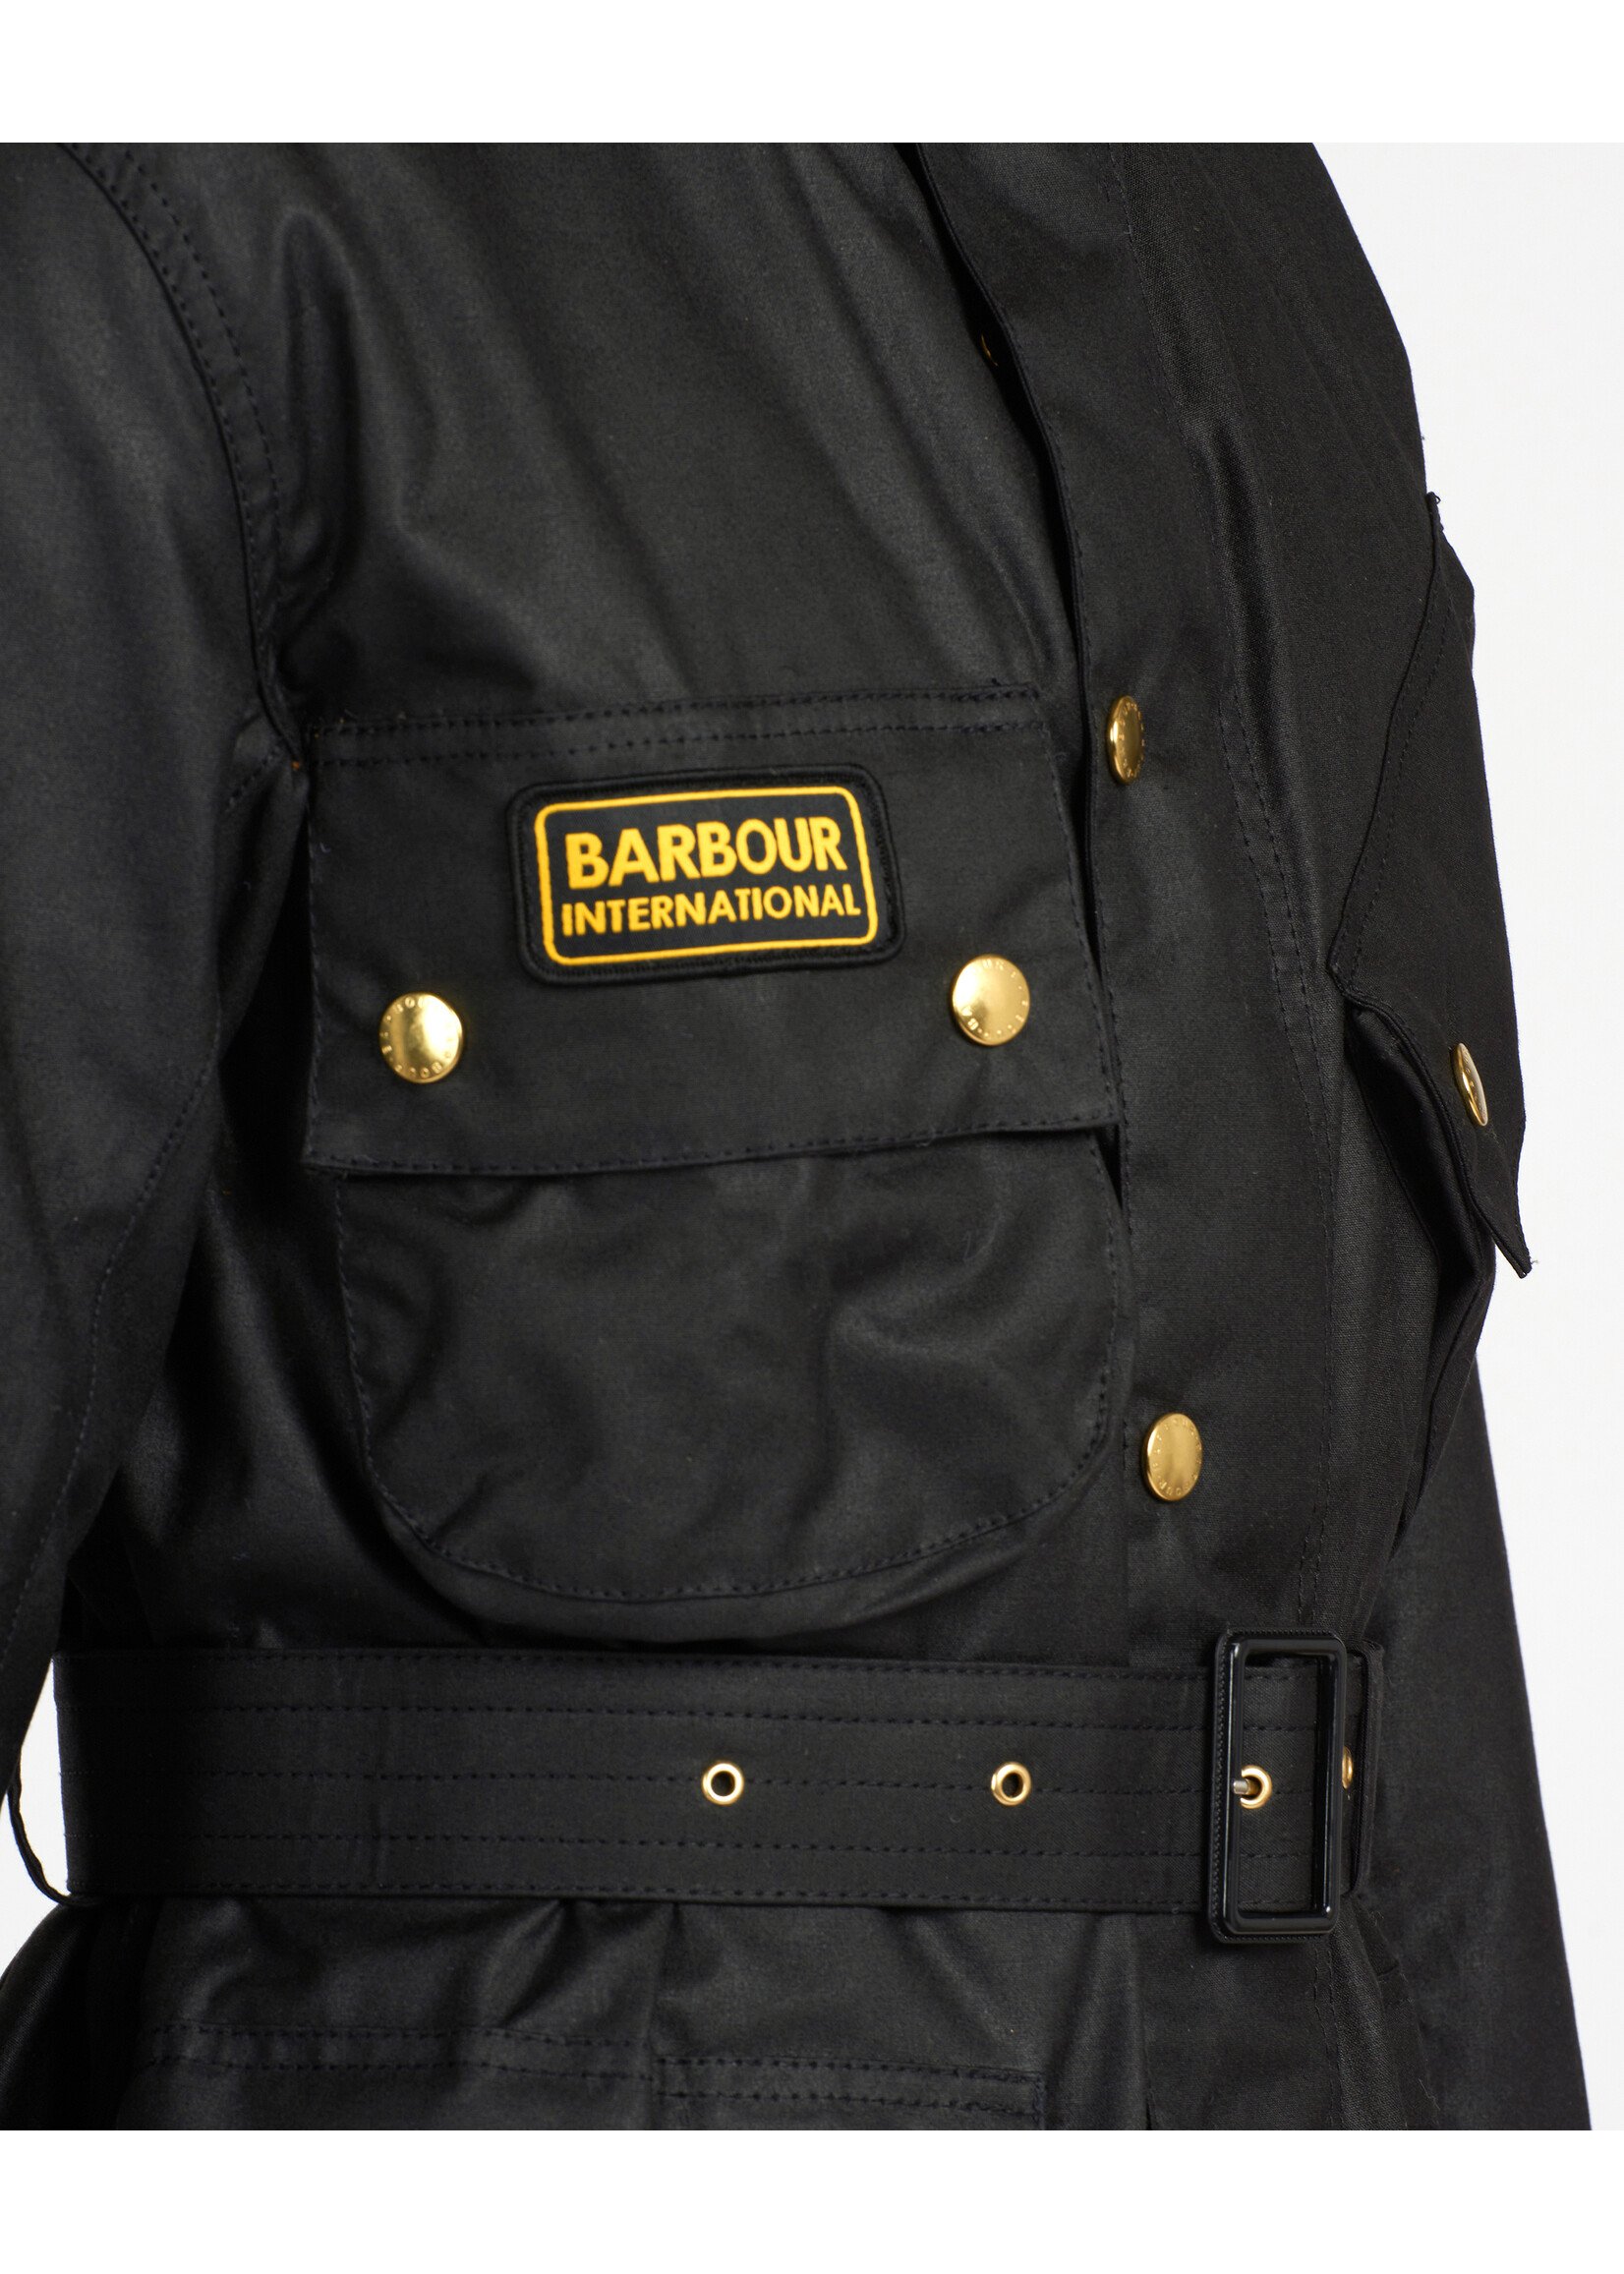 Barbour BARBOUR INTERNATIONAL ORIGINAL WAXED JACKET